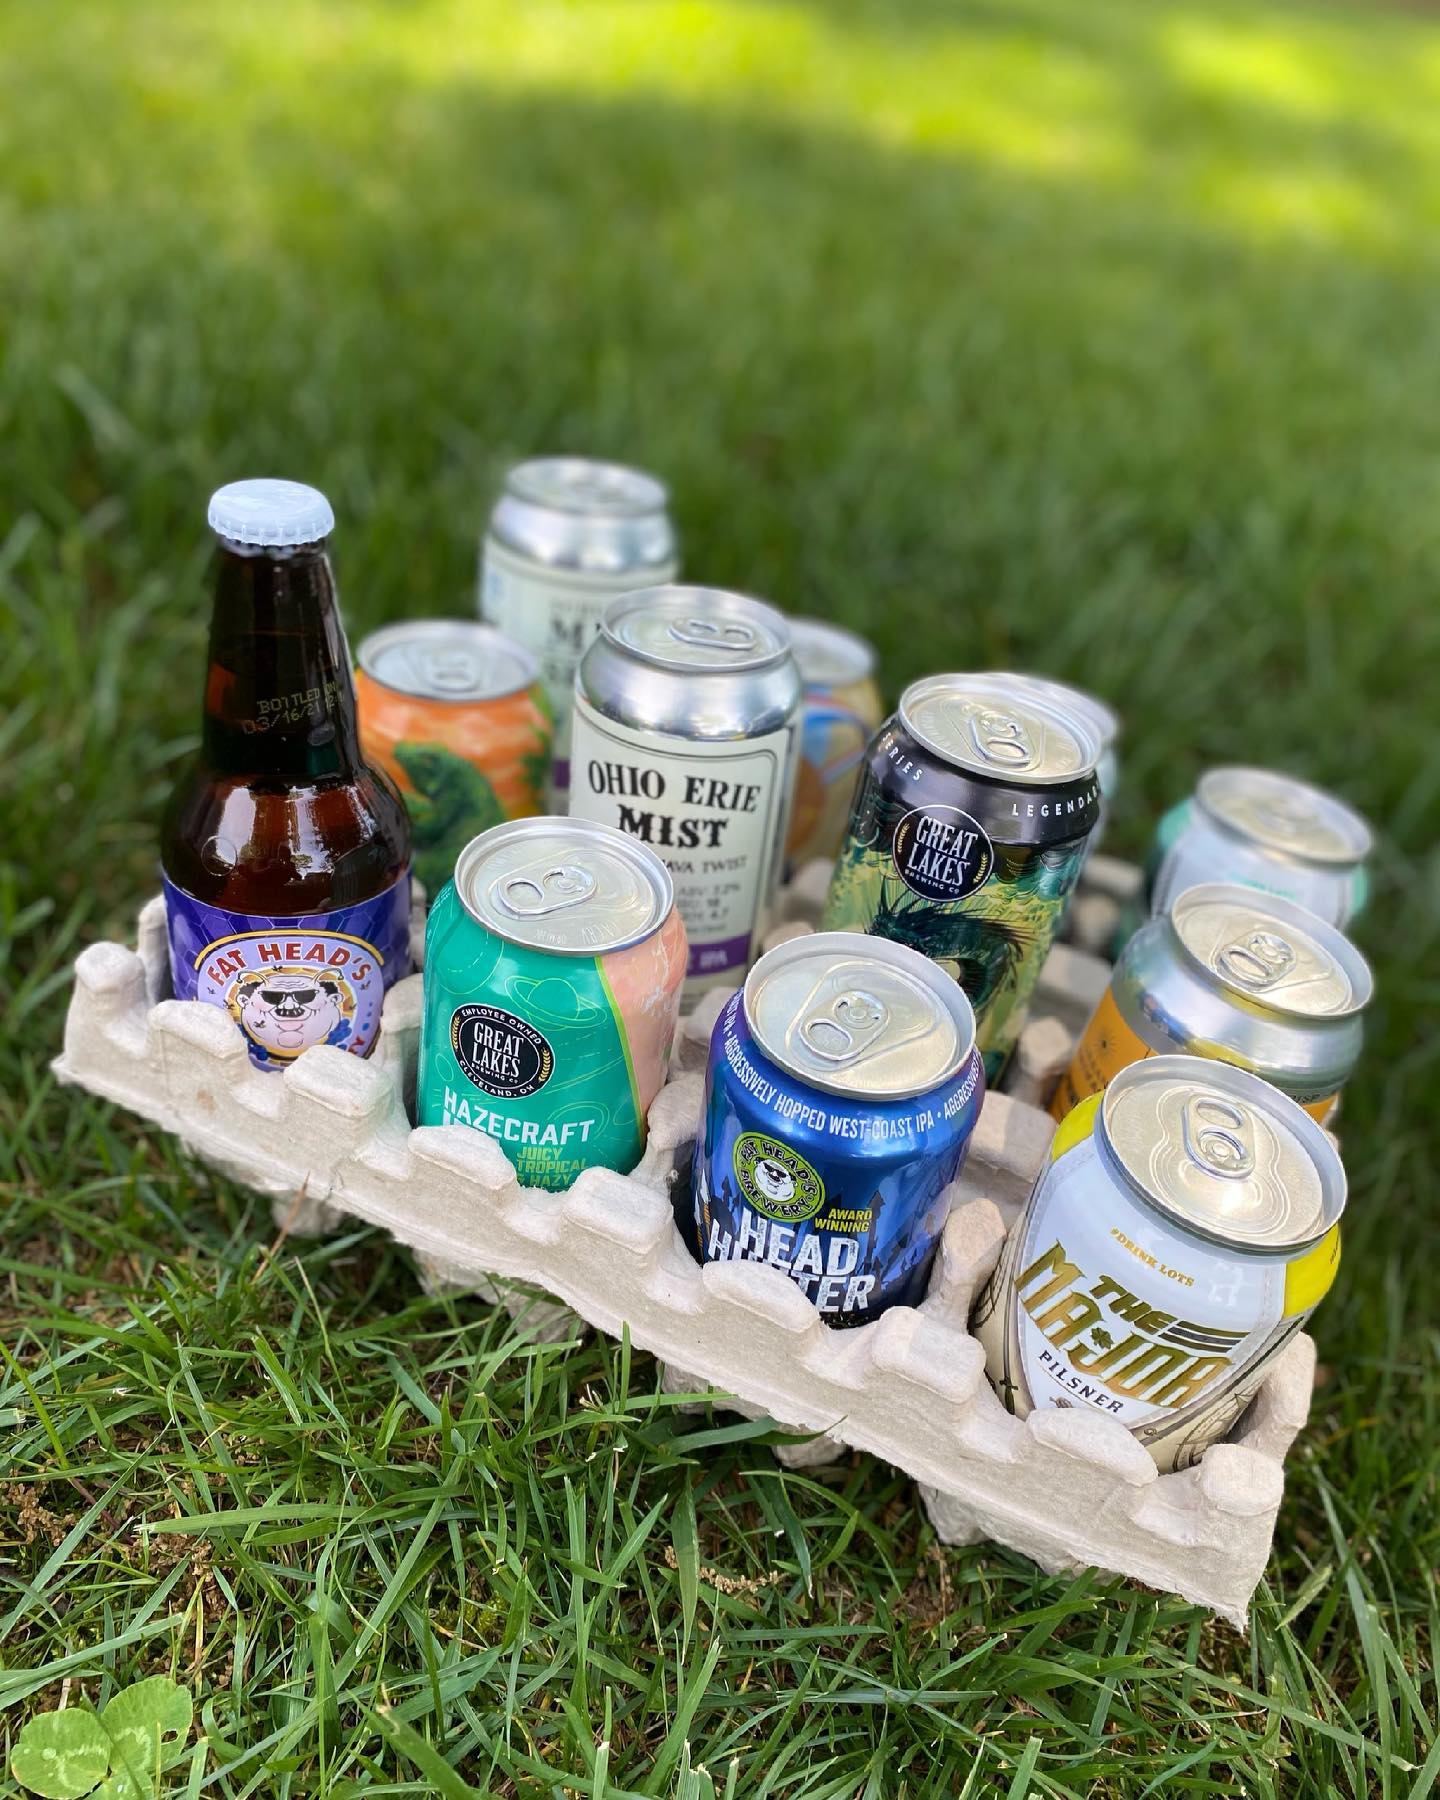 Ohio Craft Beer 12 Pack